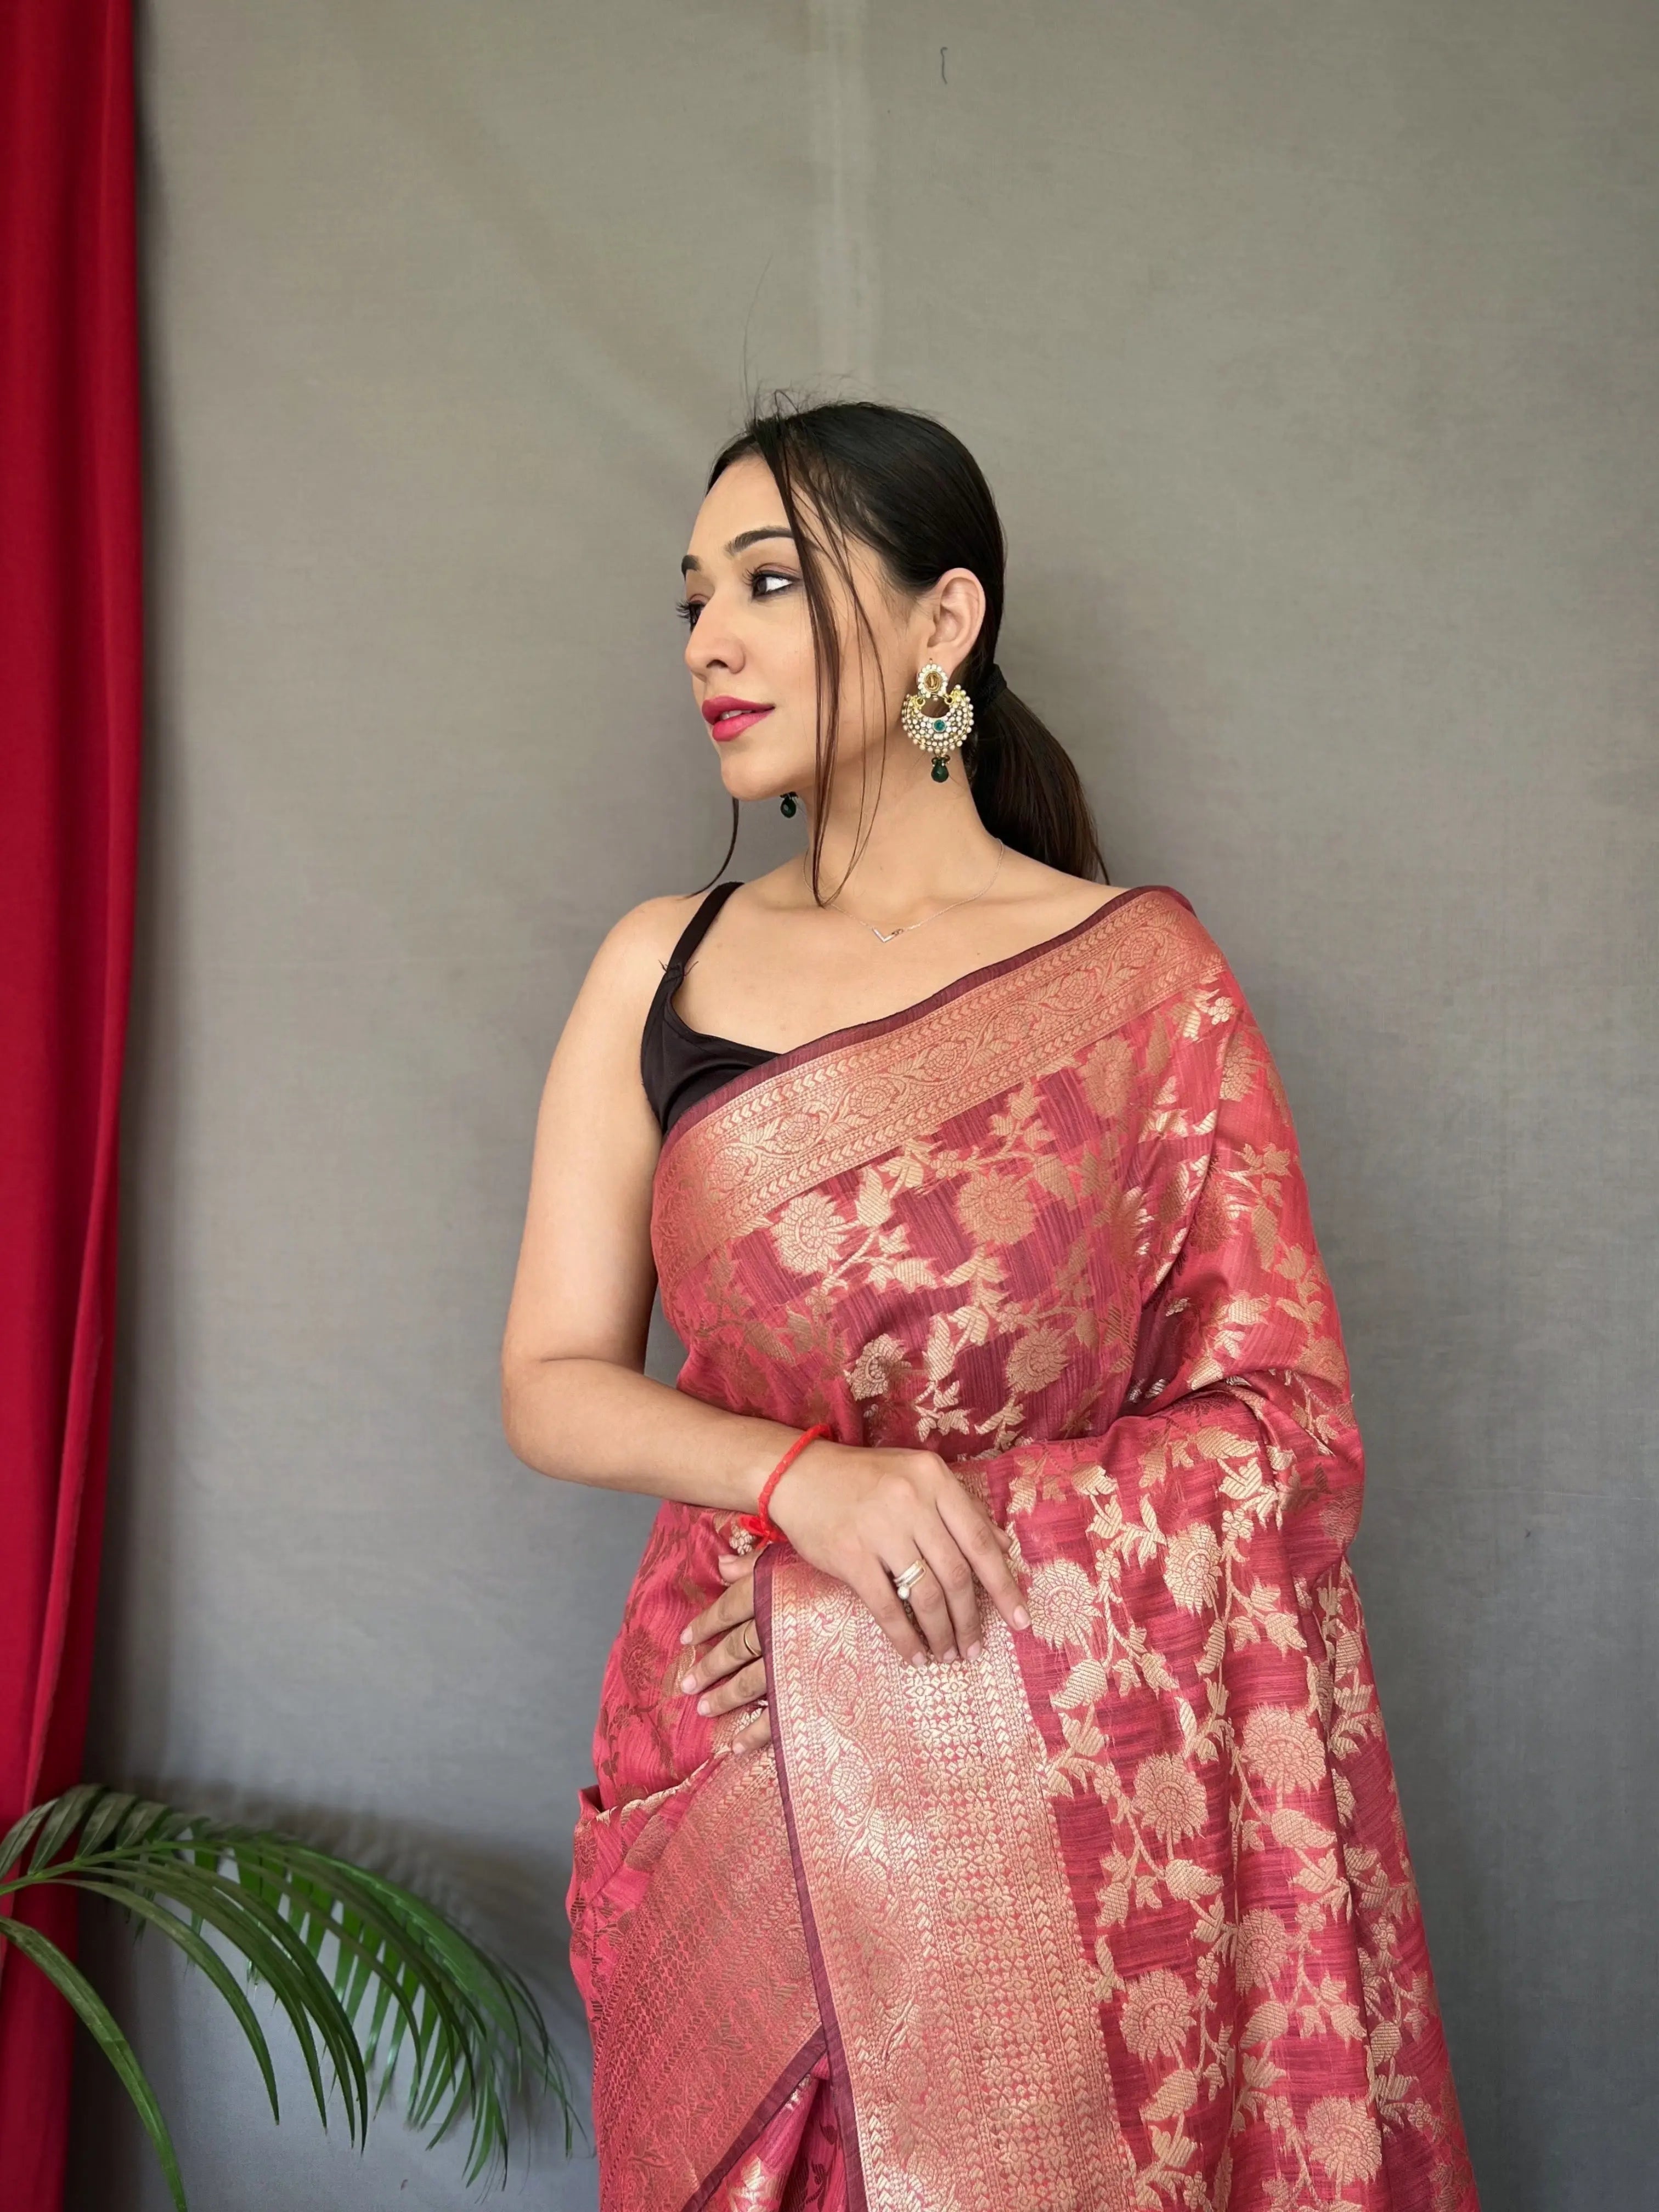 Indian Red Jhalak Cotton Linen Jaal Woven Saree - Colorful Saree